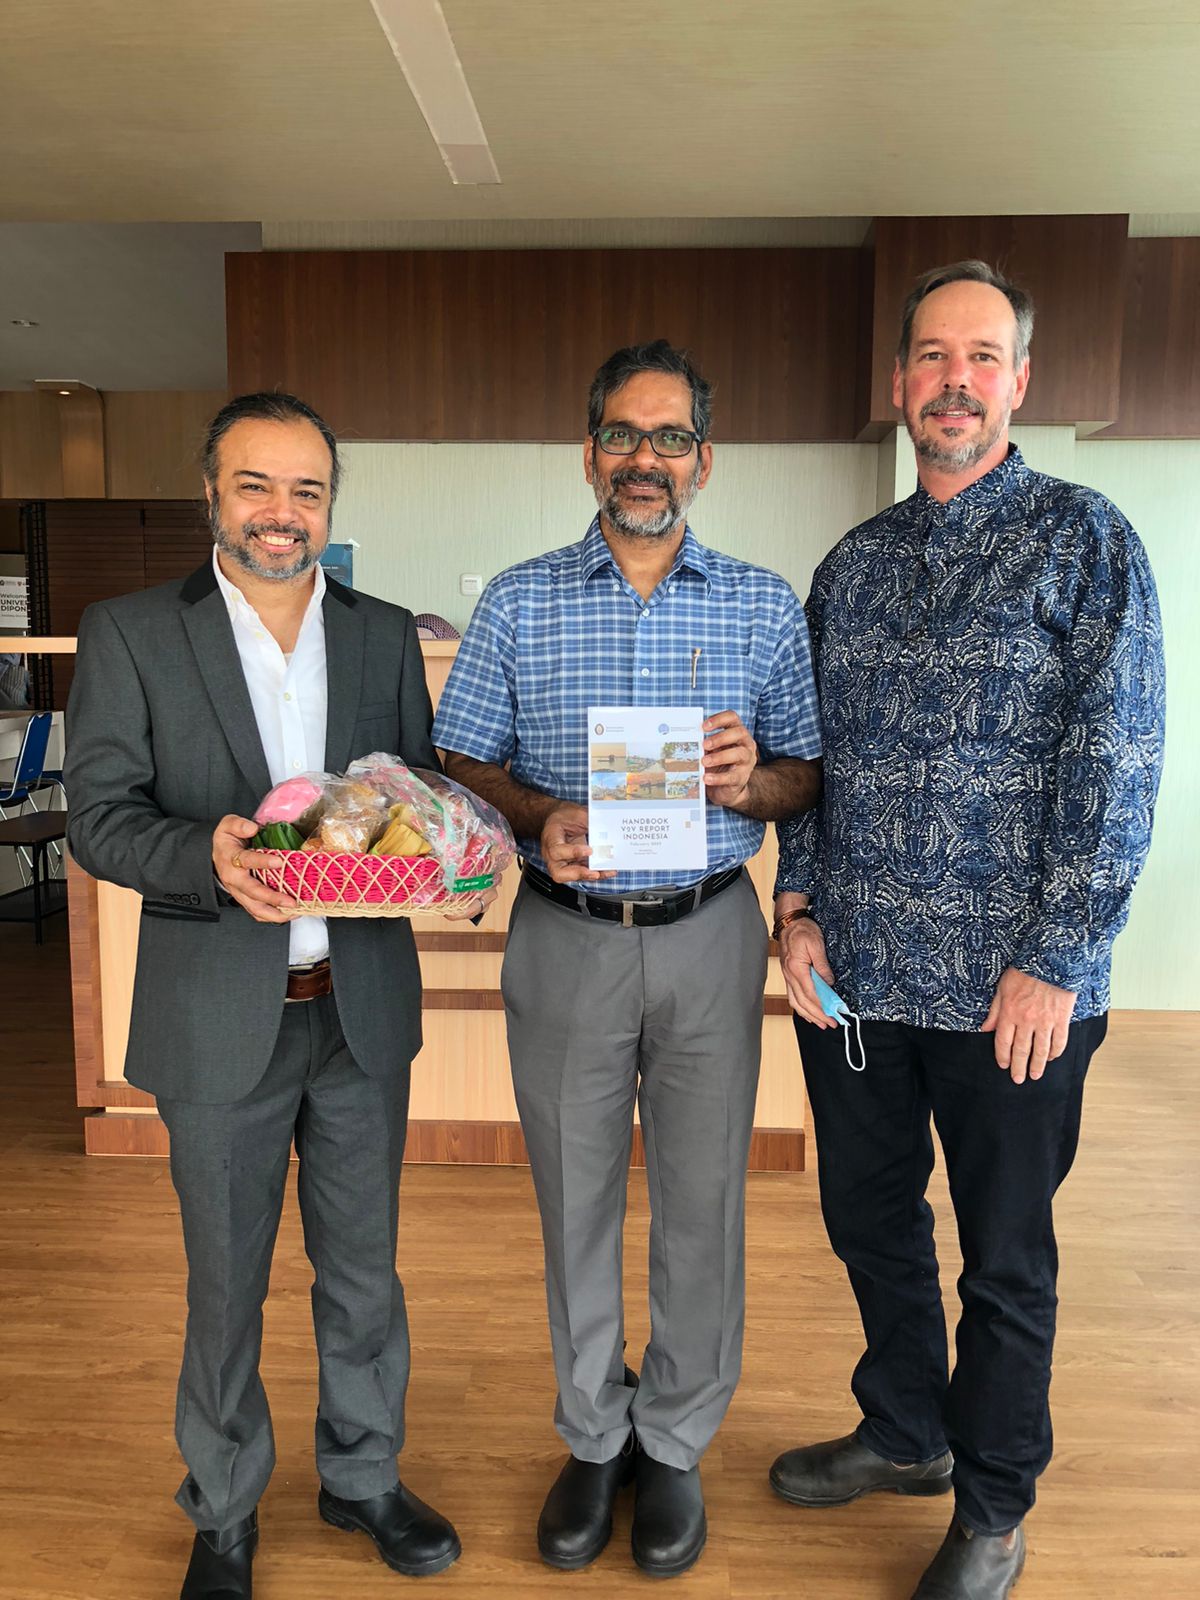 Professor Simron Singh, Associate Dean Prateep Nayak, and Dean Bruce Frayne.